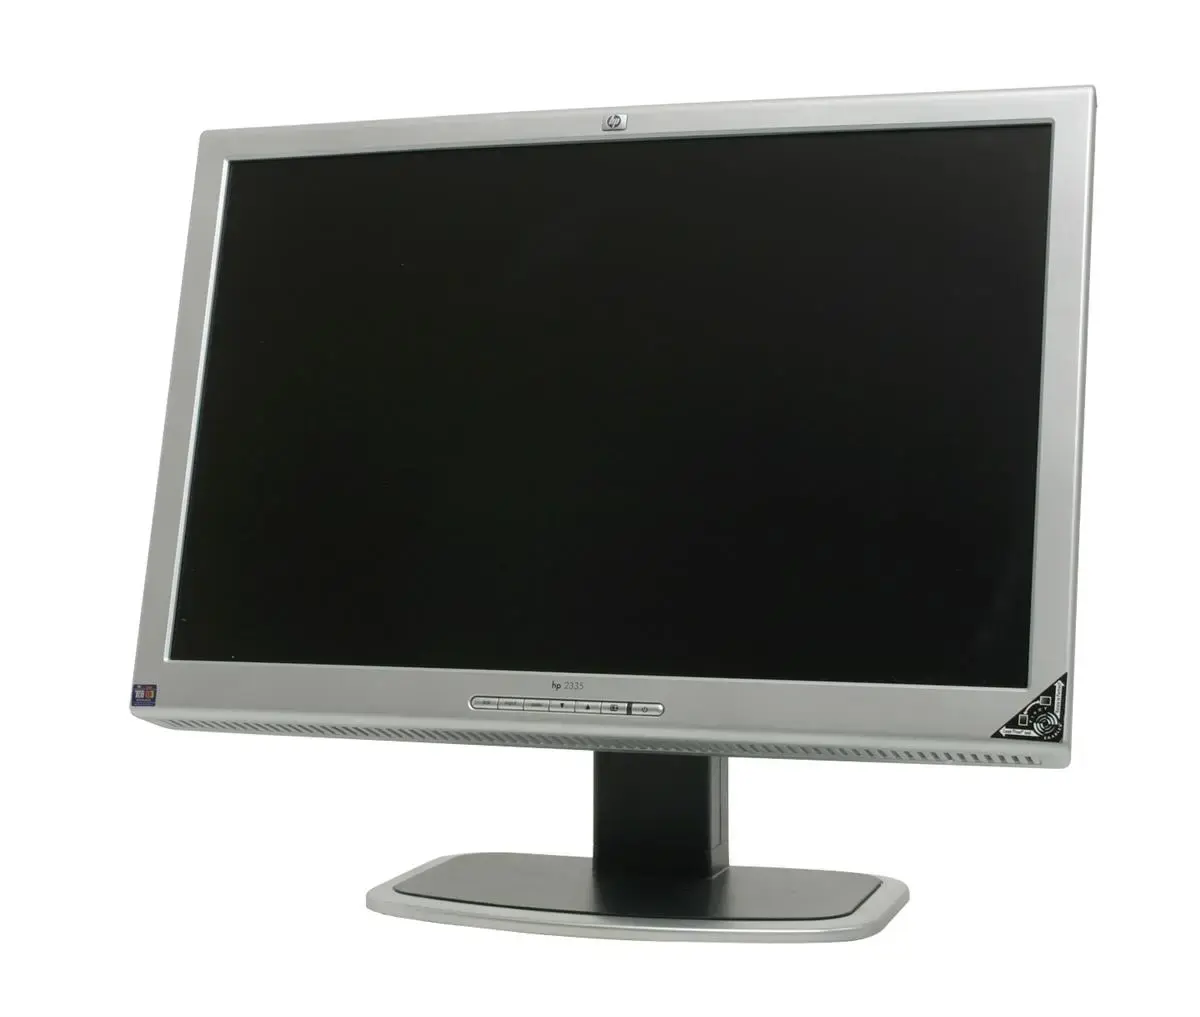 P9615A HP L2335 23-inch Wide Screen TFT LCD Flat panel Display UWXGA (DVI and VGA compatible)